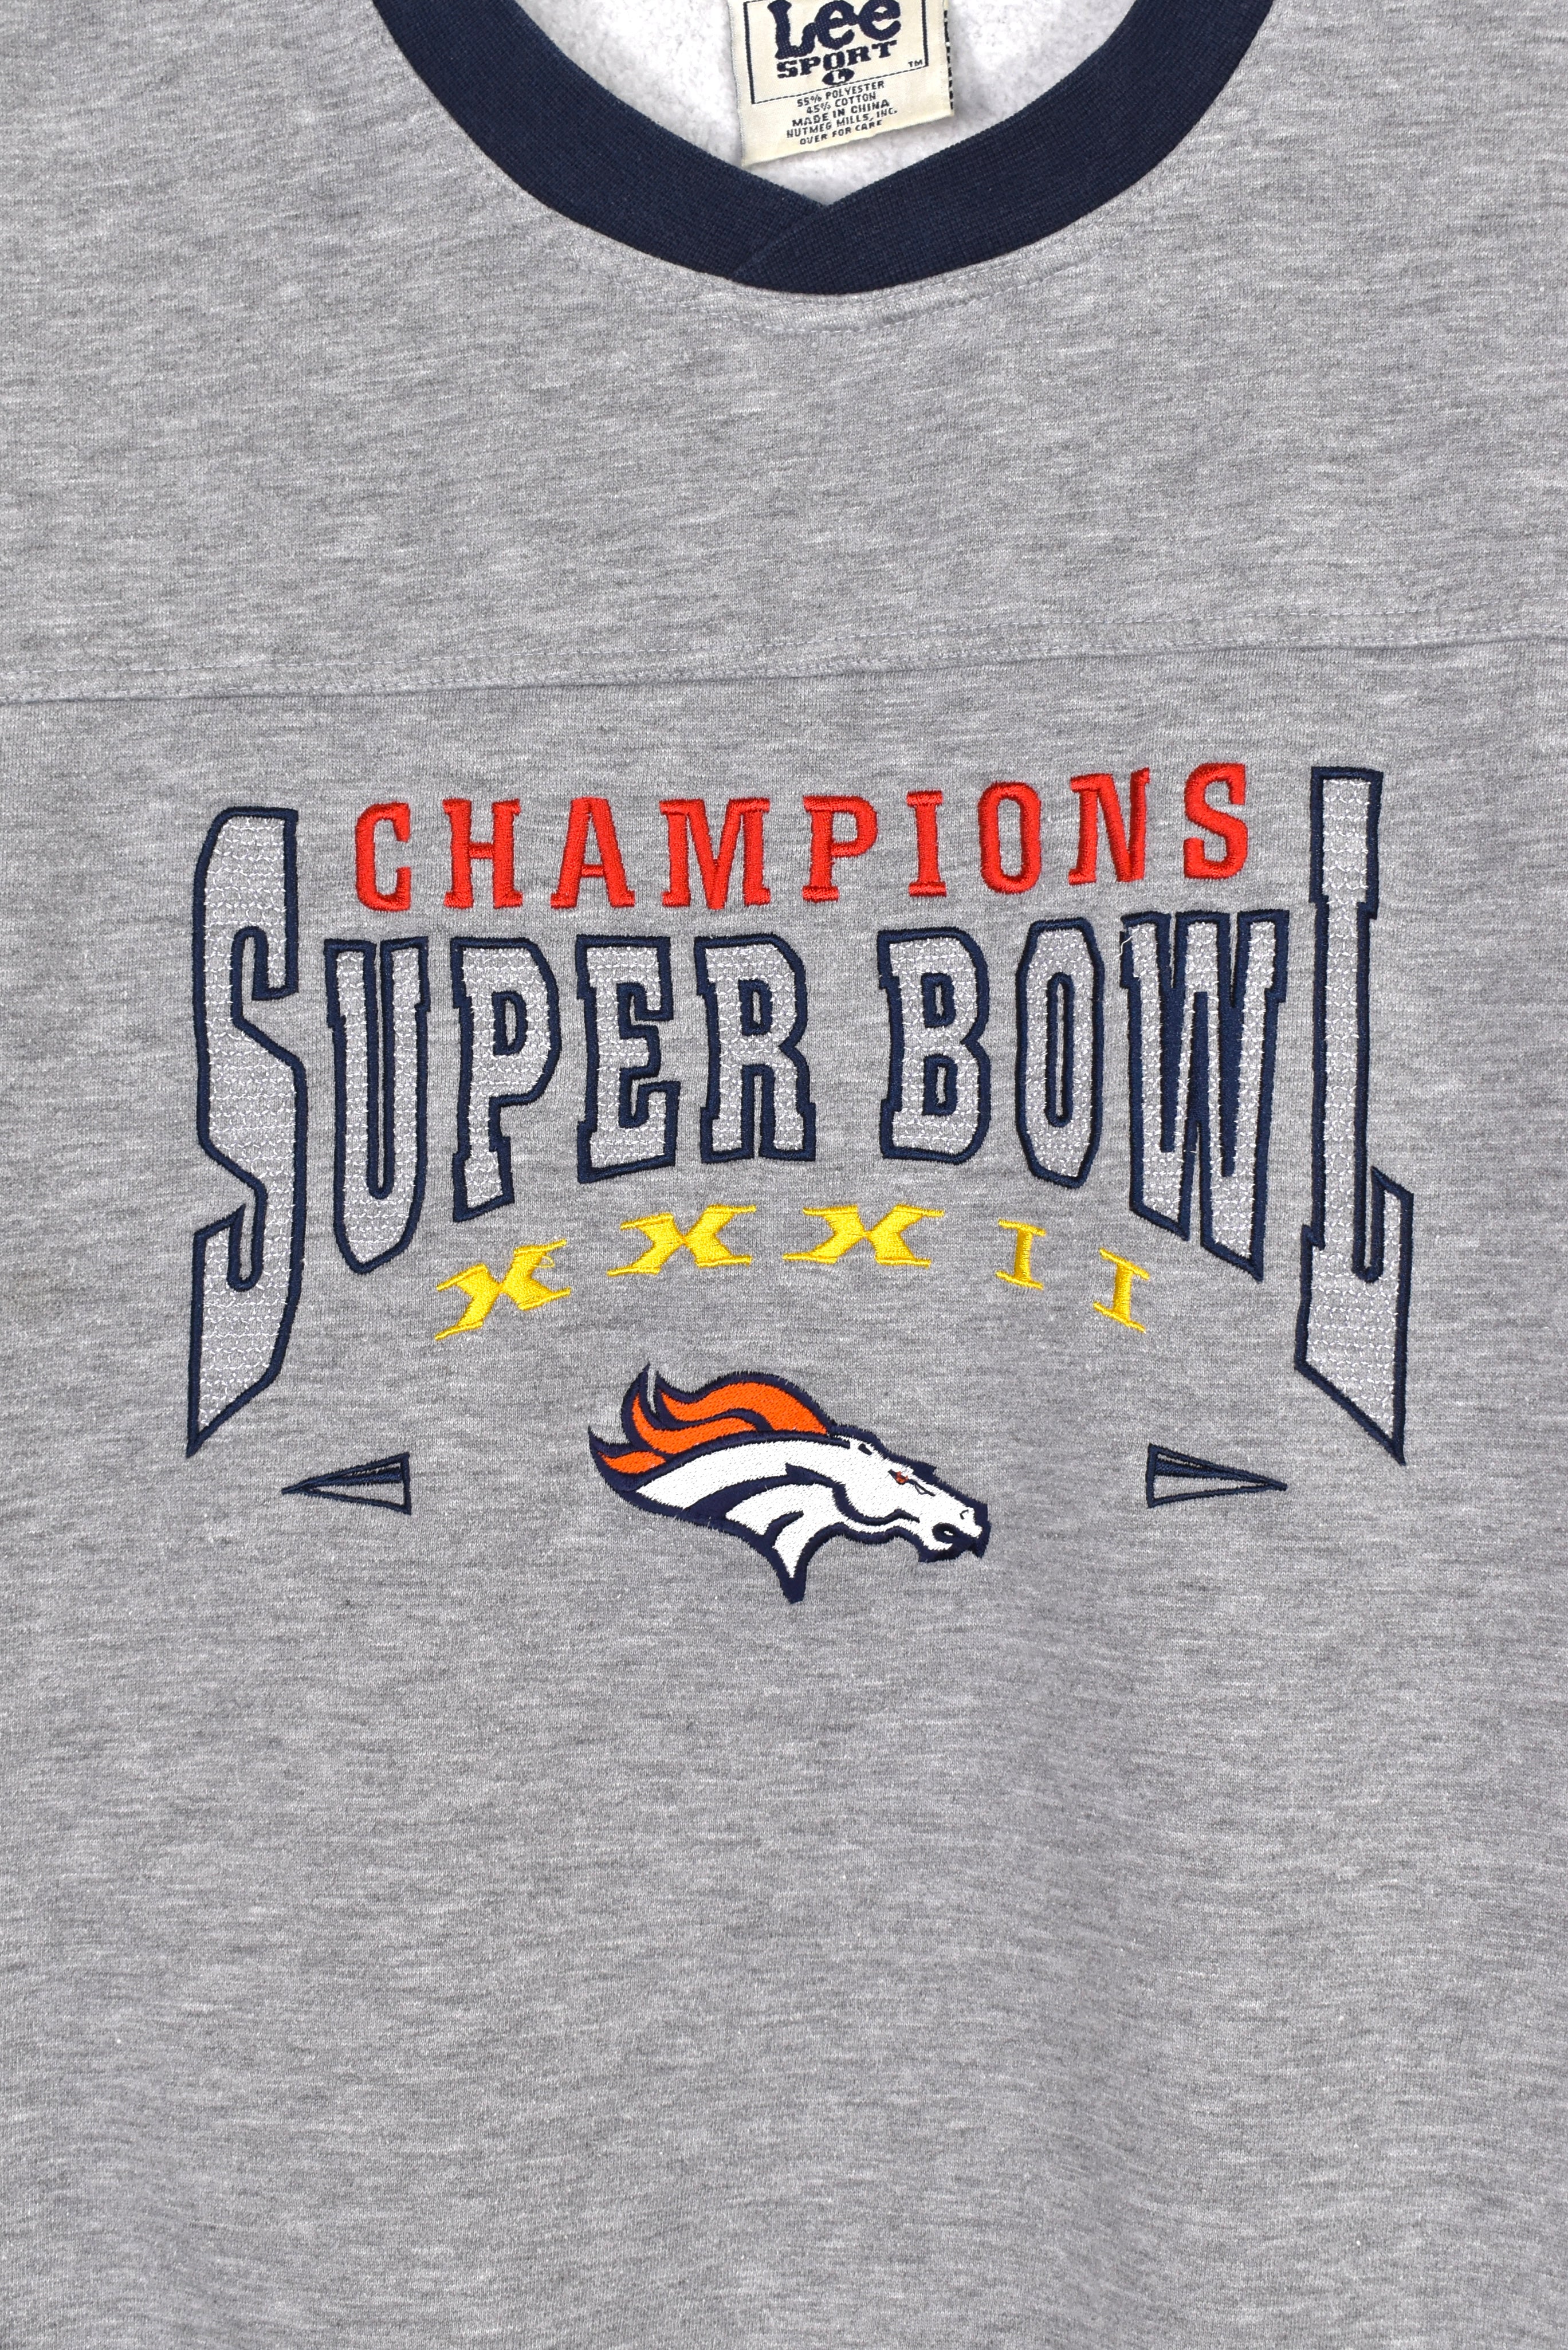 Vintage Denver Broncos sweatshirt (XL), grey NFL embroidered crewneck